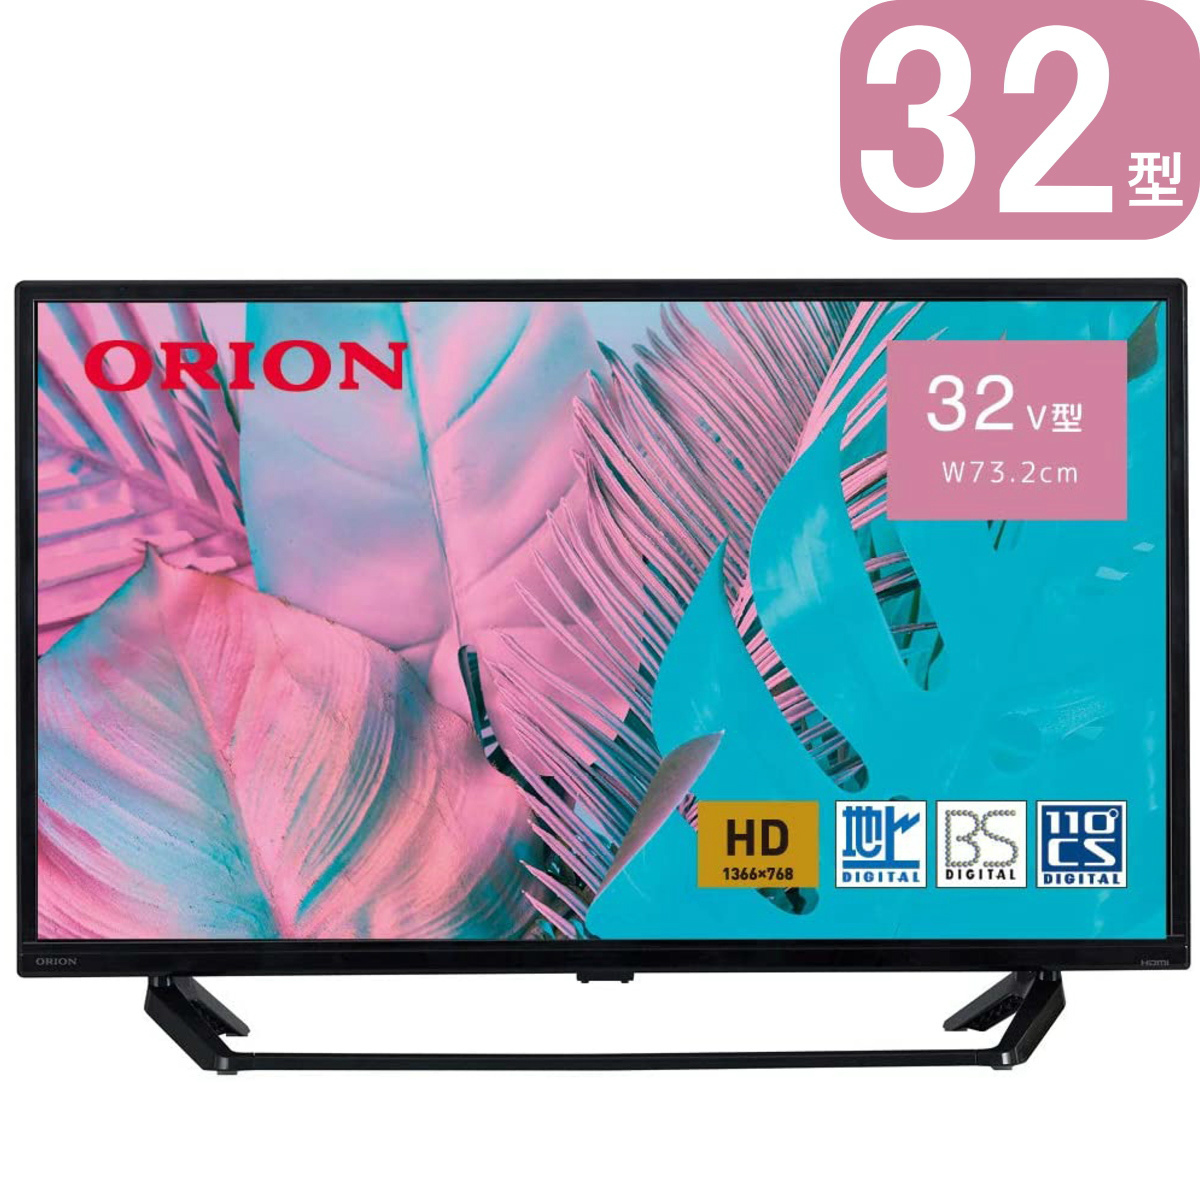 ORION 32型 ハイビジョン液晶テレビ | OL32WD300 | 裏番組録画機能 3波チューナー | オリオン 1年保証